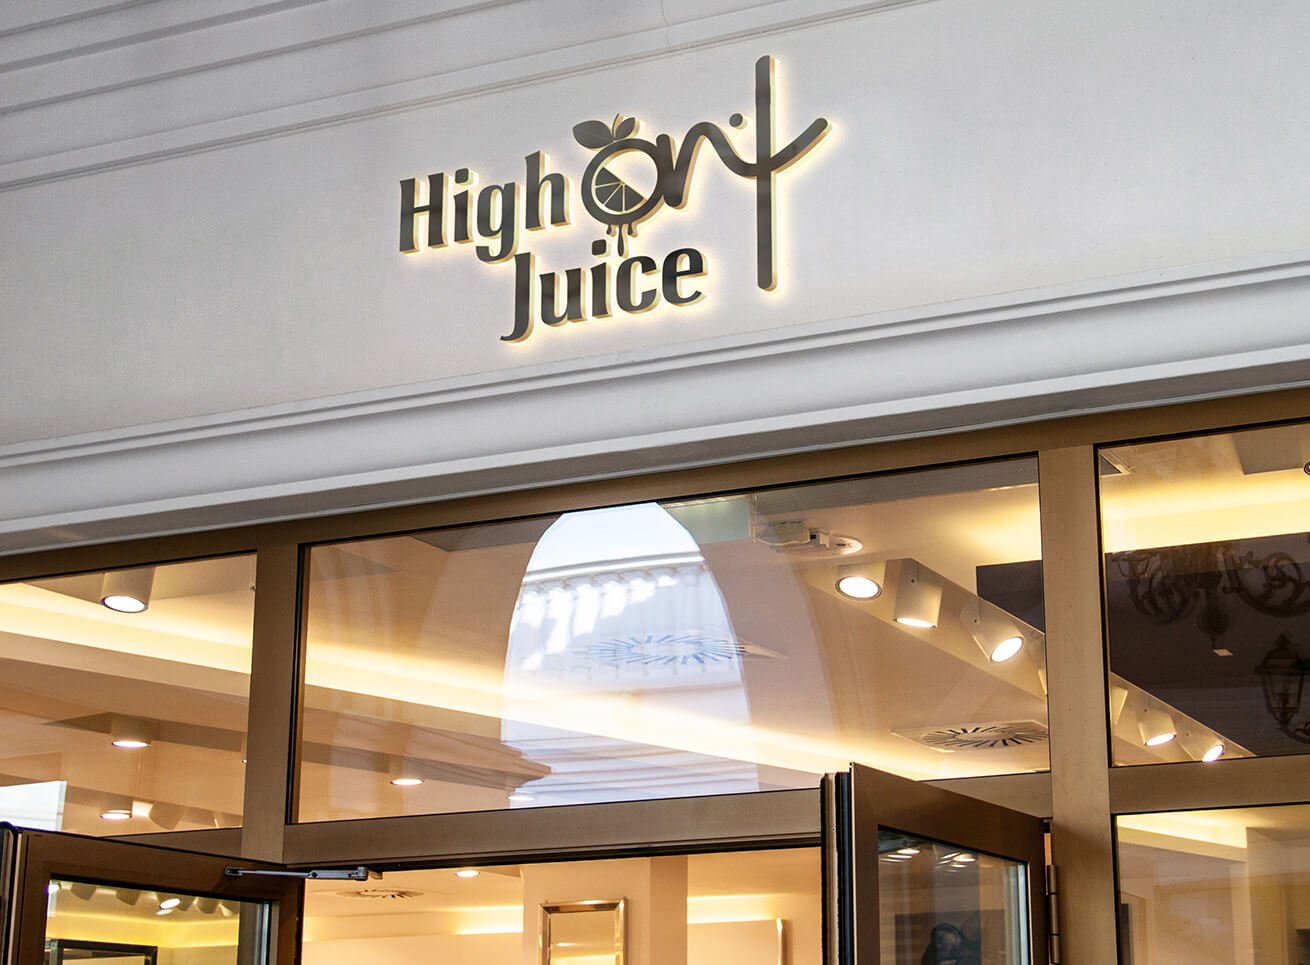 High_on_juice branding